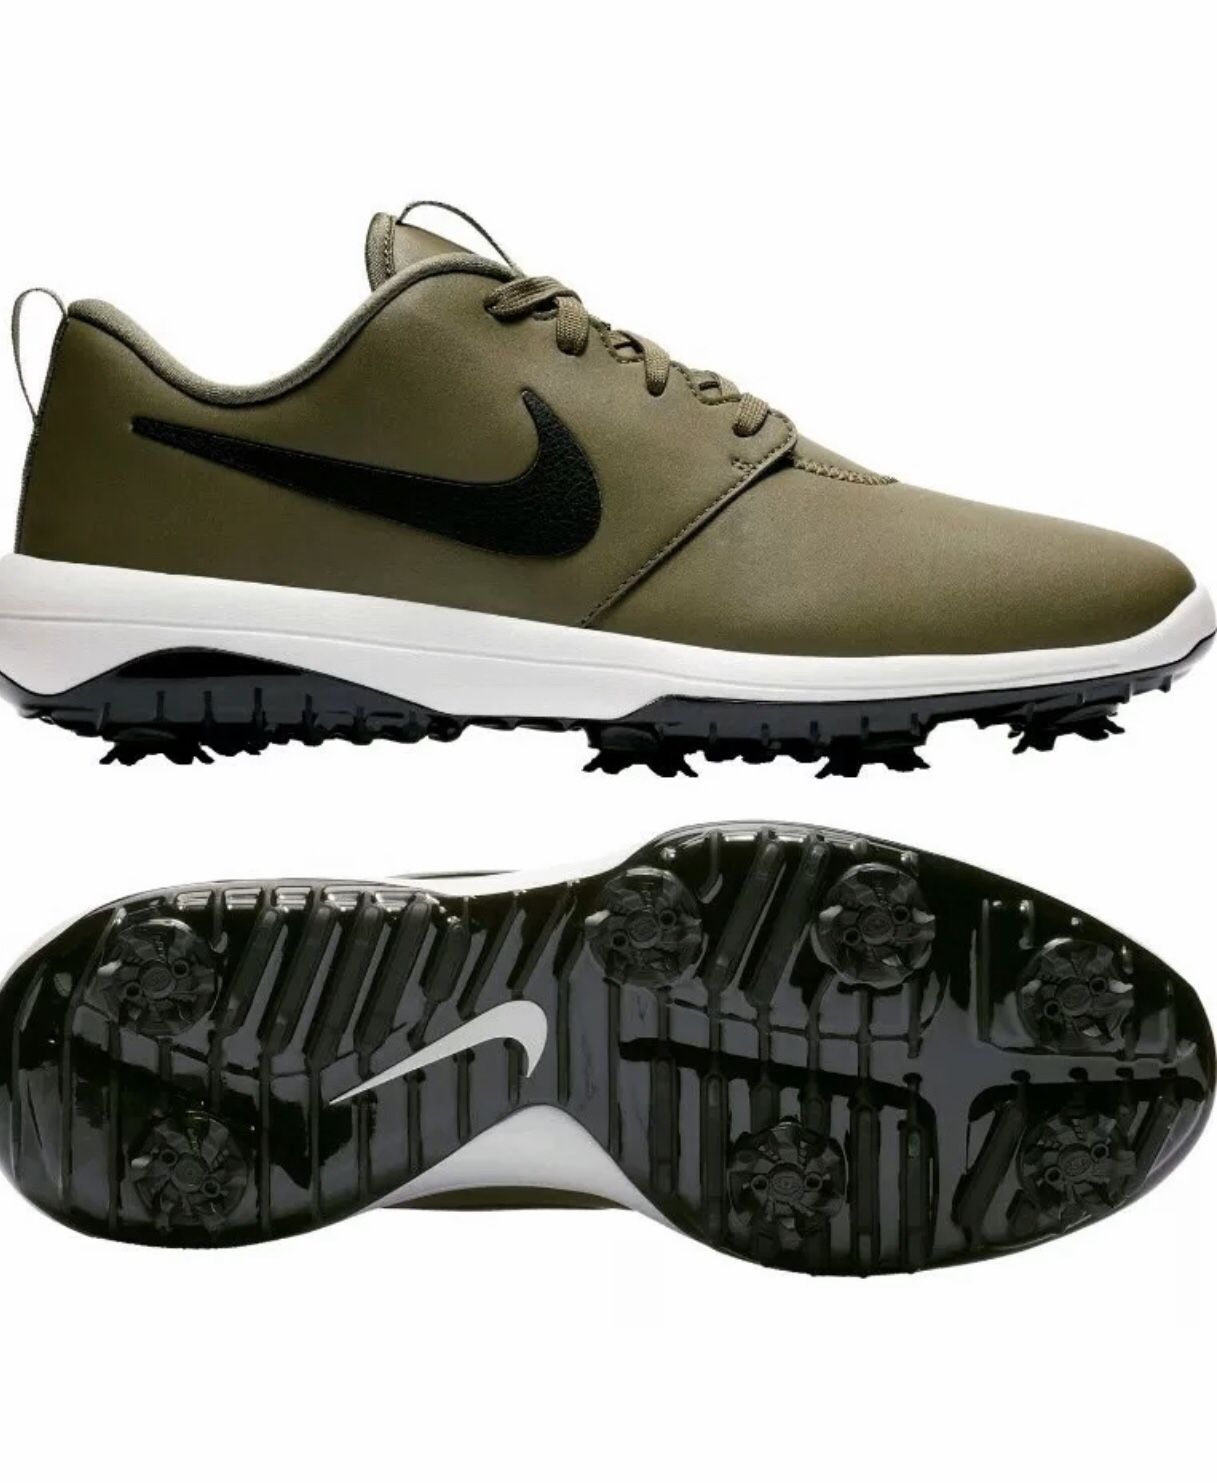 New! Nike Roshe G Tour Golf Shoes AR5580-200 Olive/Black Sz 11.5